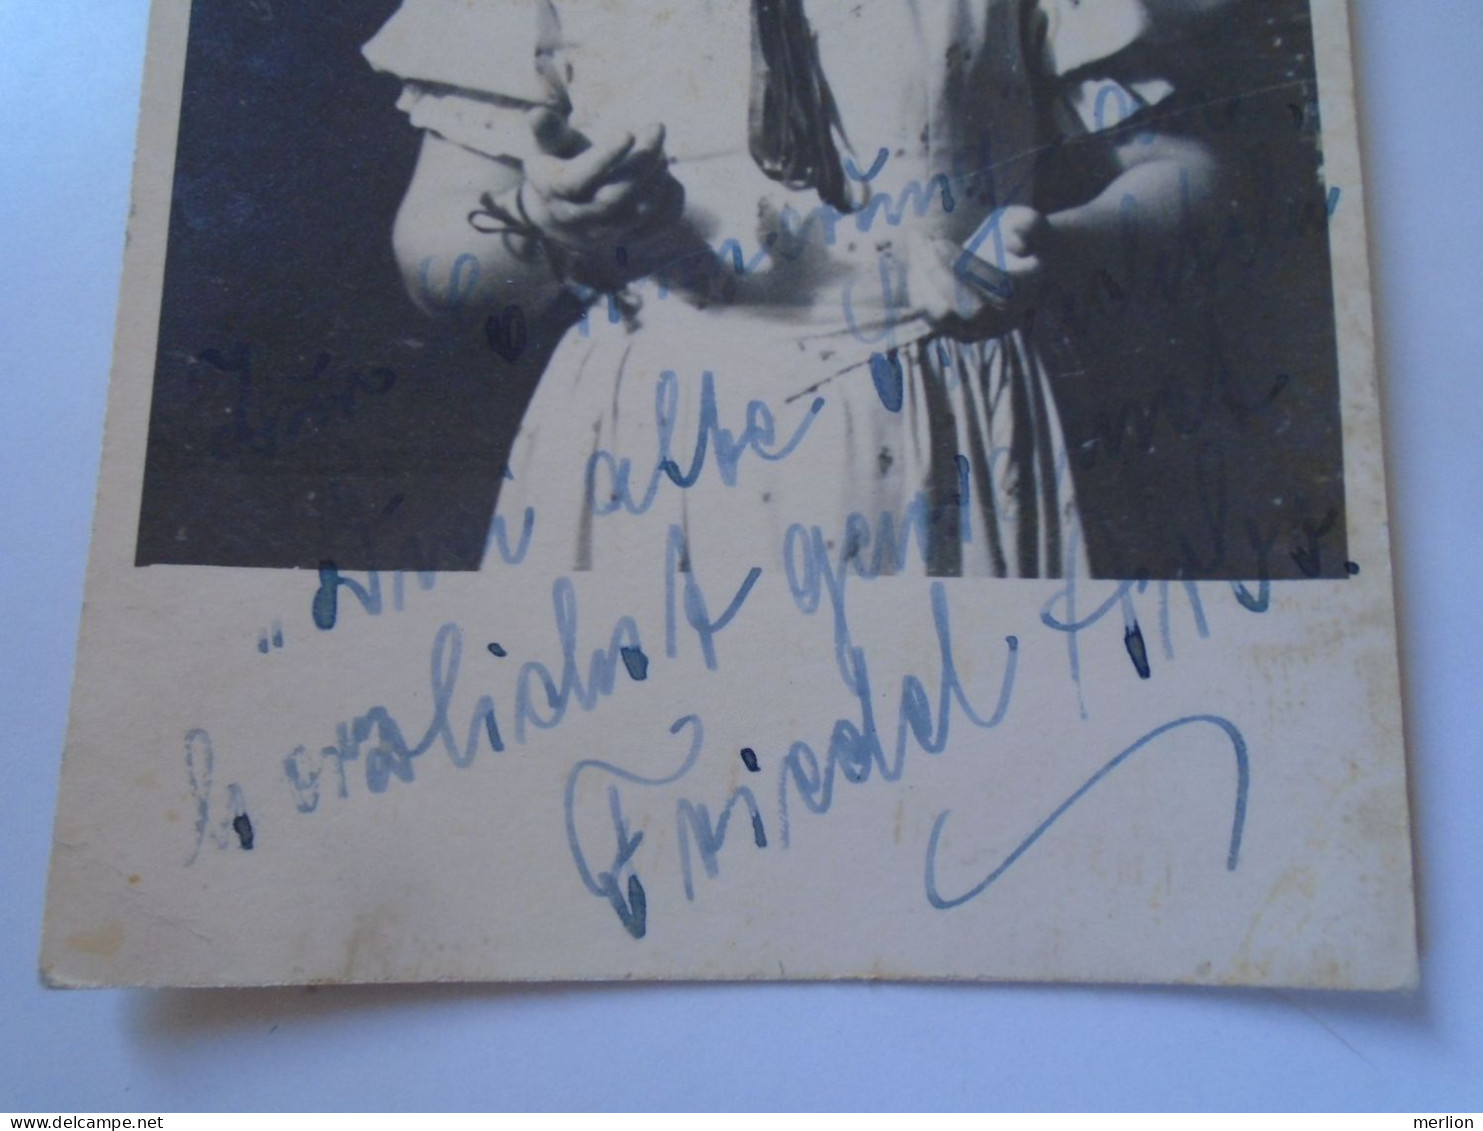 D198496   Old Photo   With Autograph -  Friedel Arbo  Actress   Ca 1940 - Actors & Comedians